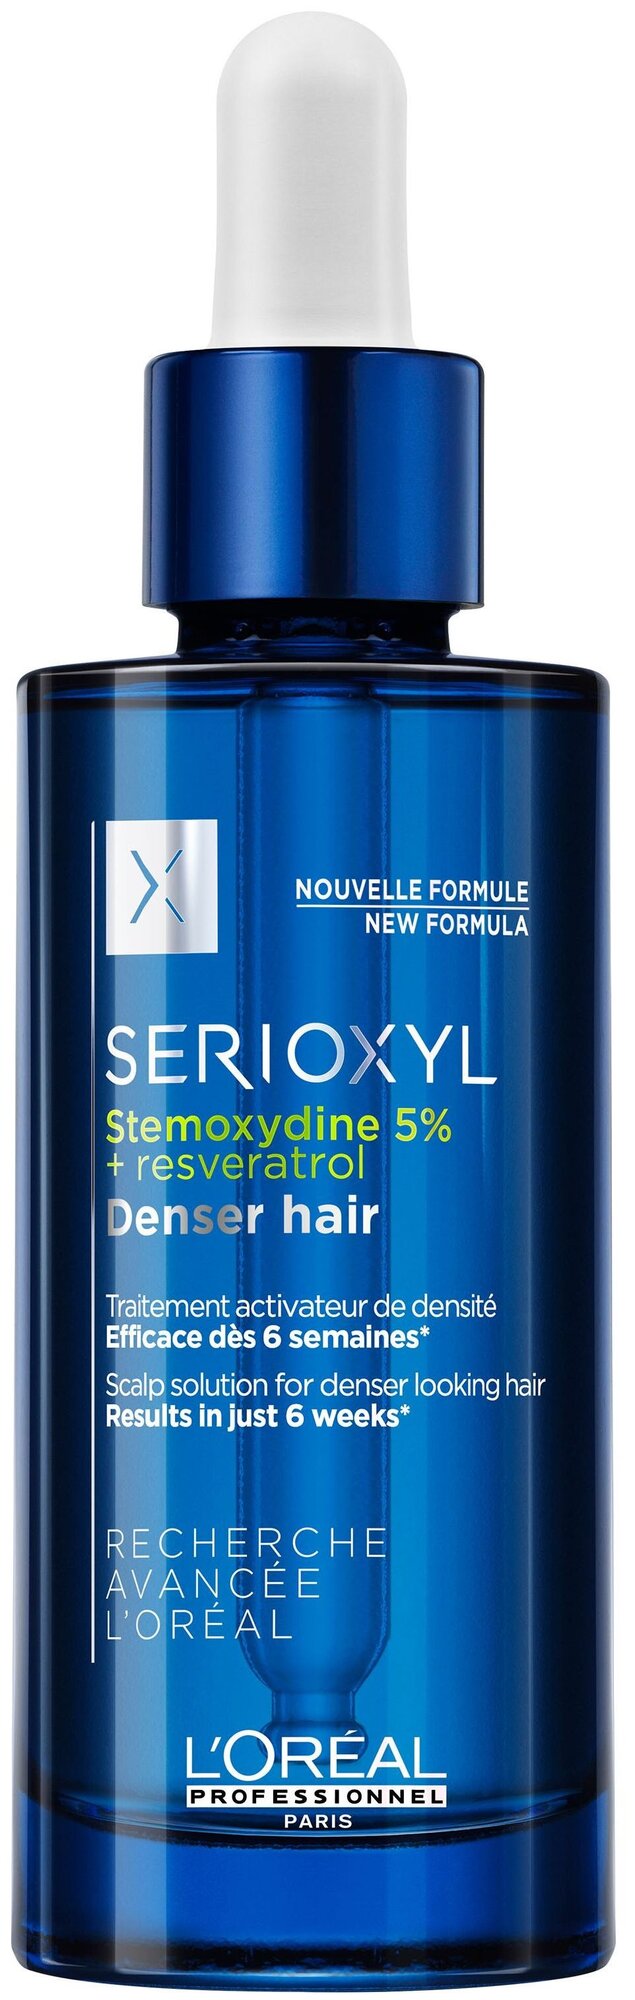 L'Oreal Professionnel Serioxyl Denser сыворотка для густоты волос, 90 мл, бутылка